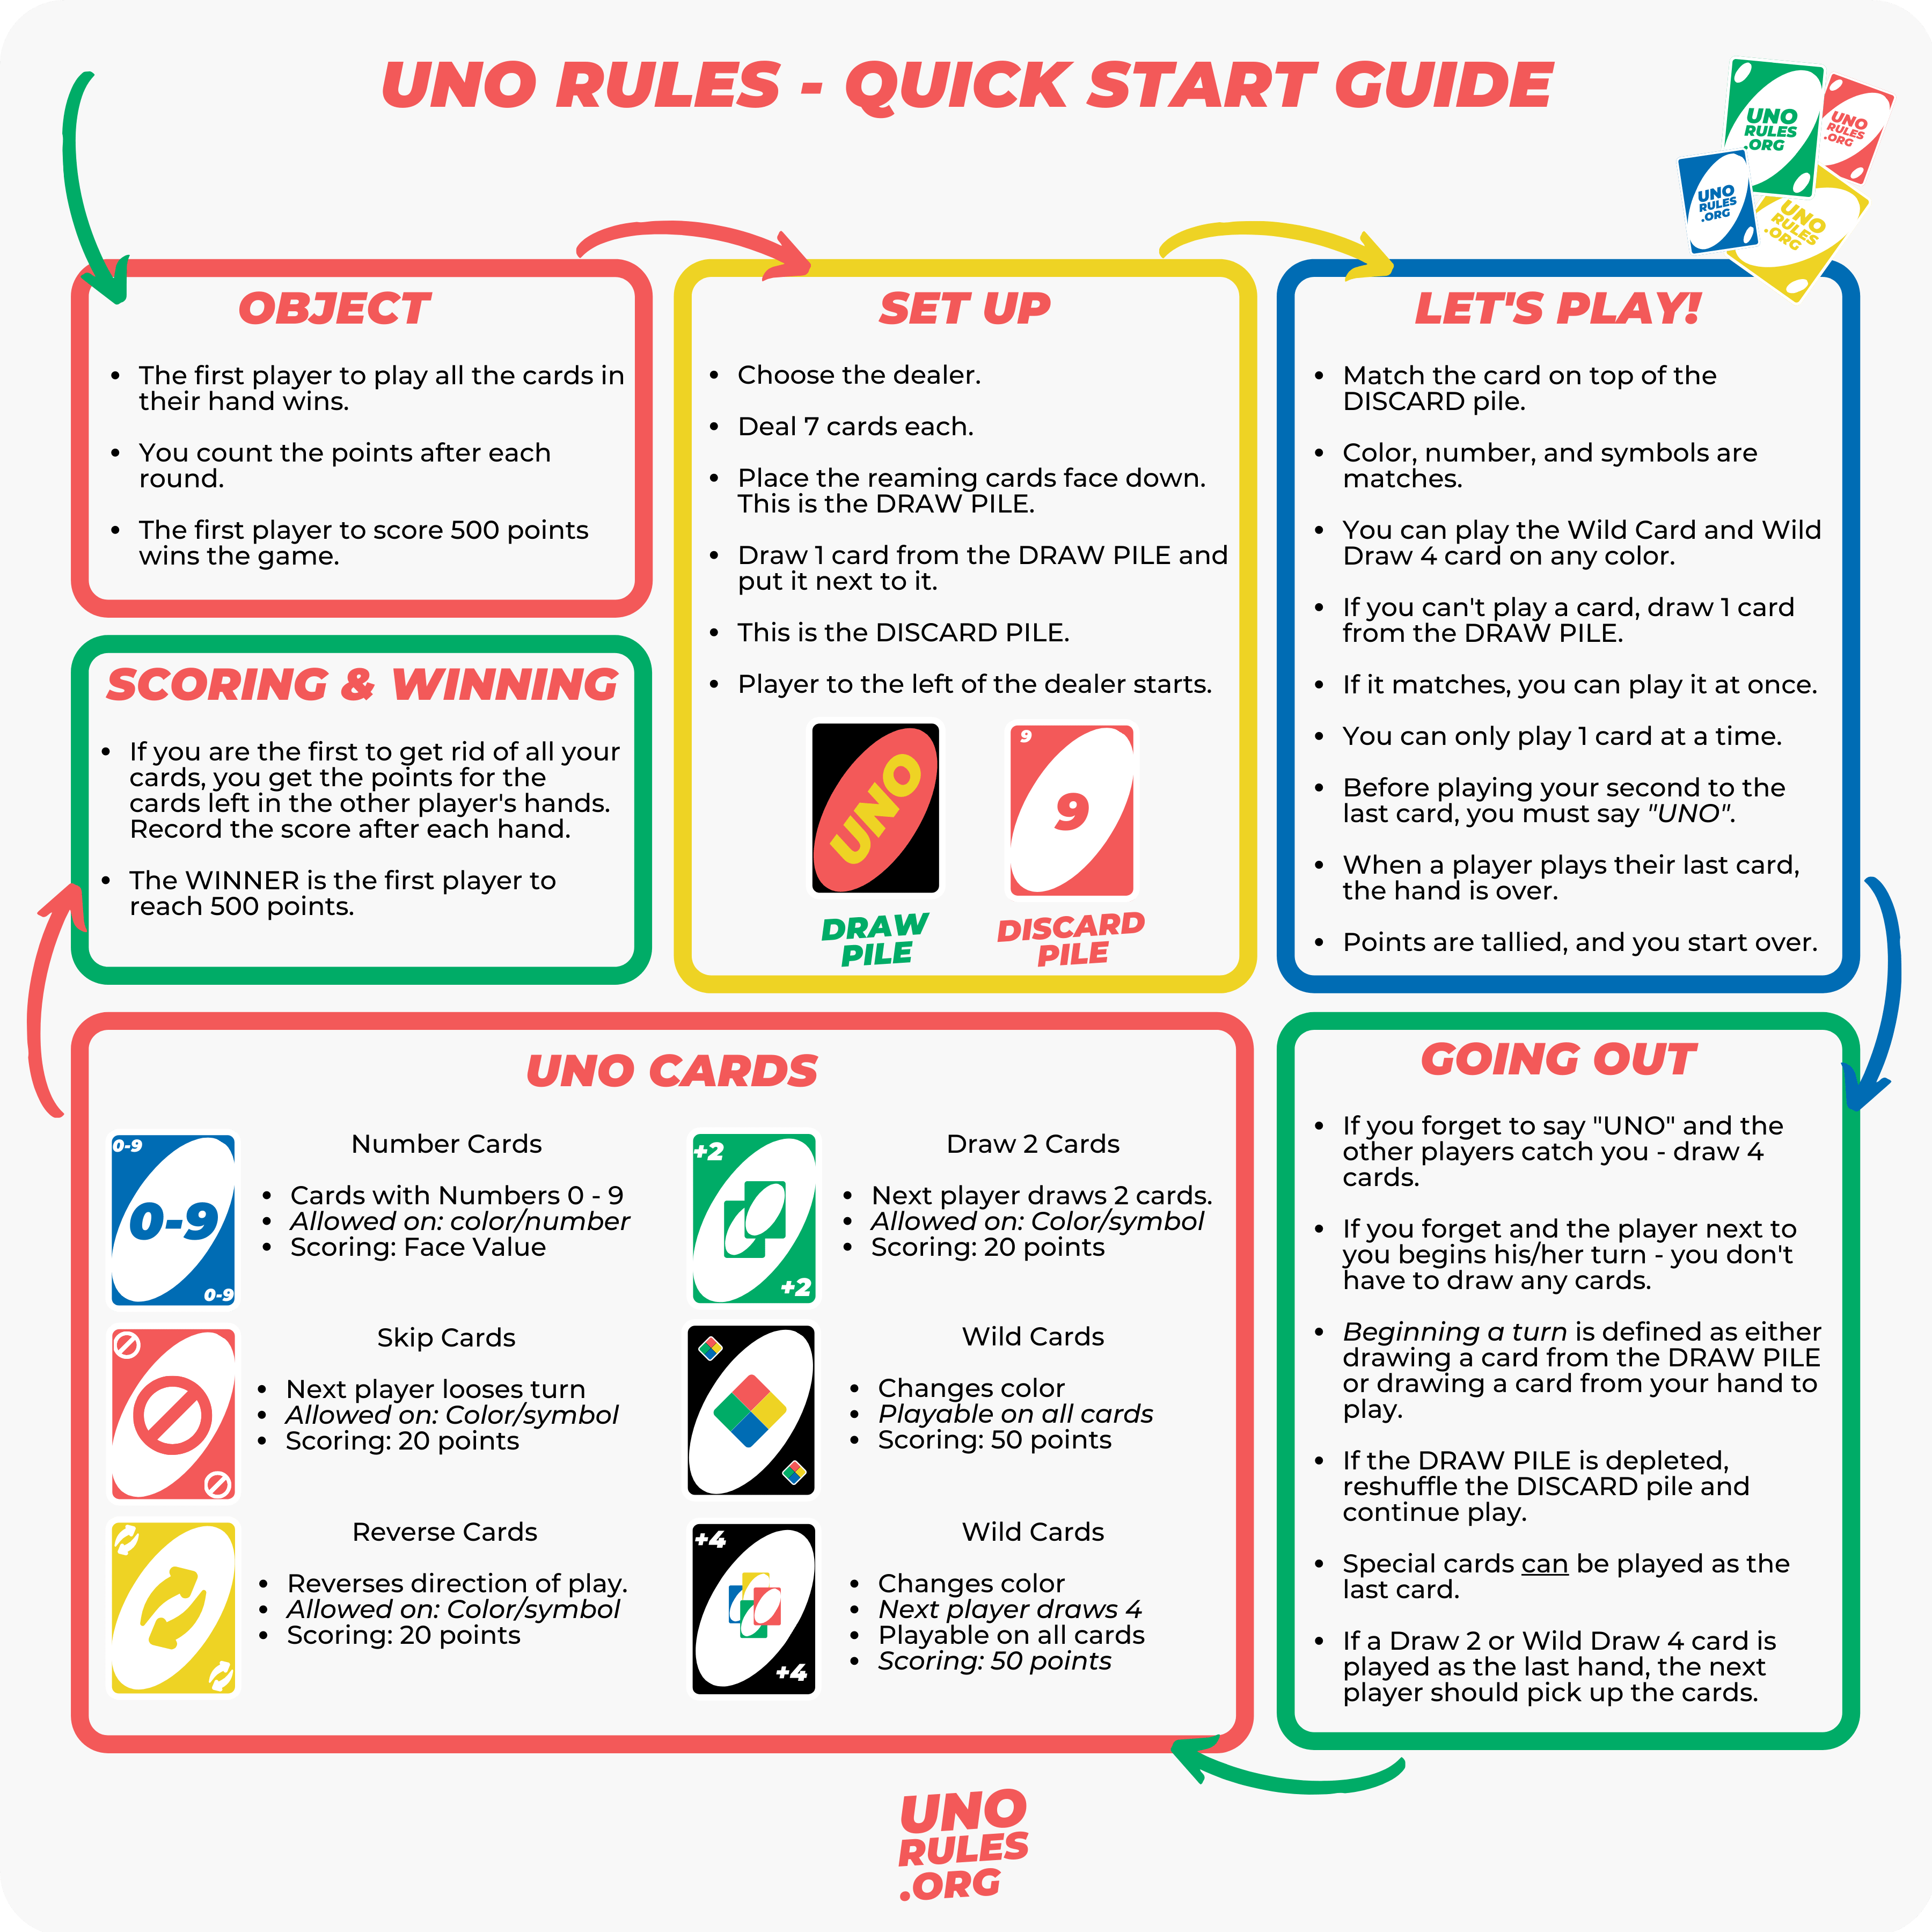 Uno Game Rules - Nola jokatu Uno karta jokoan